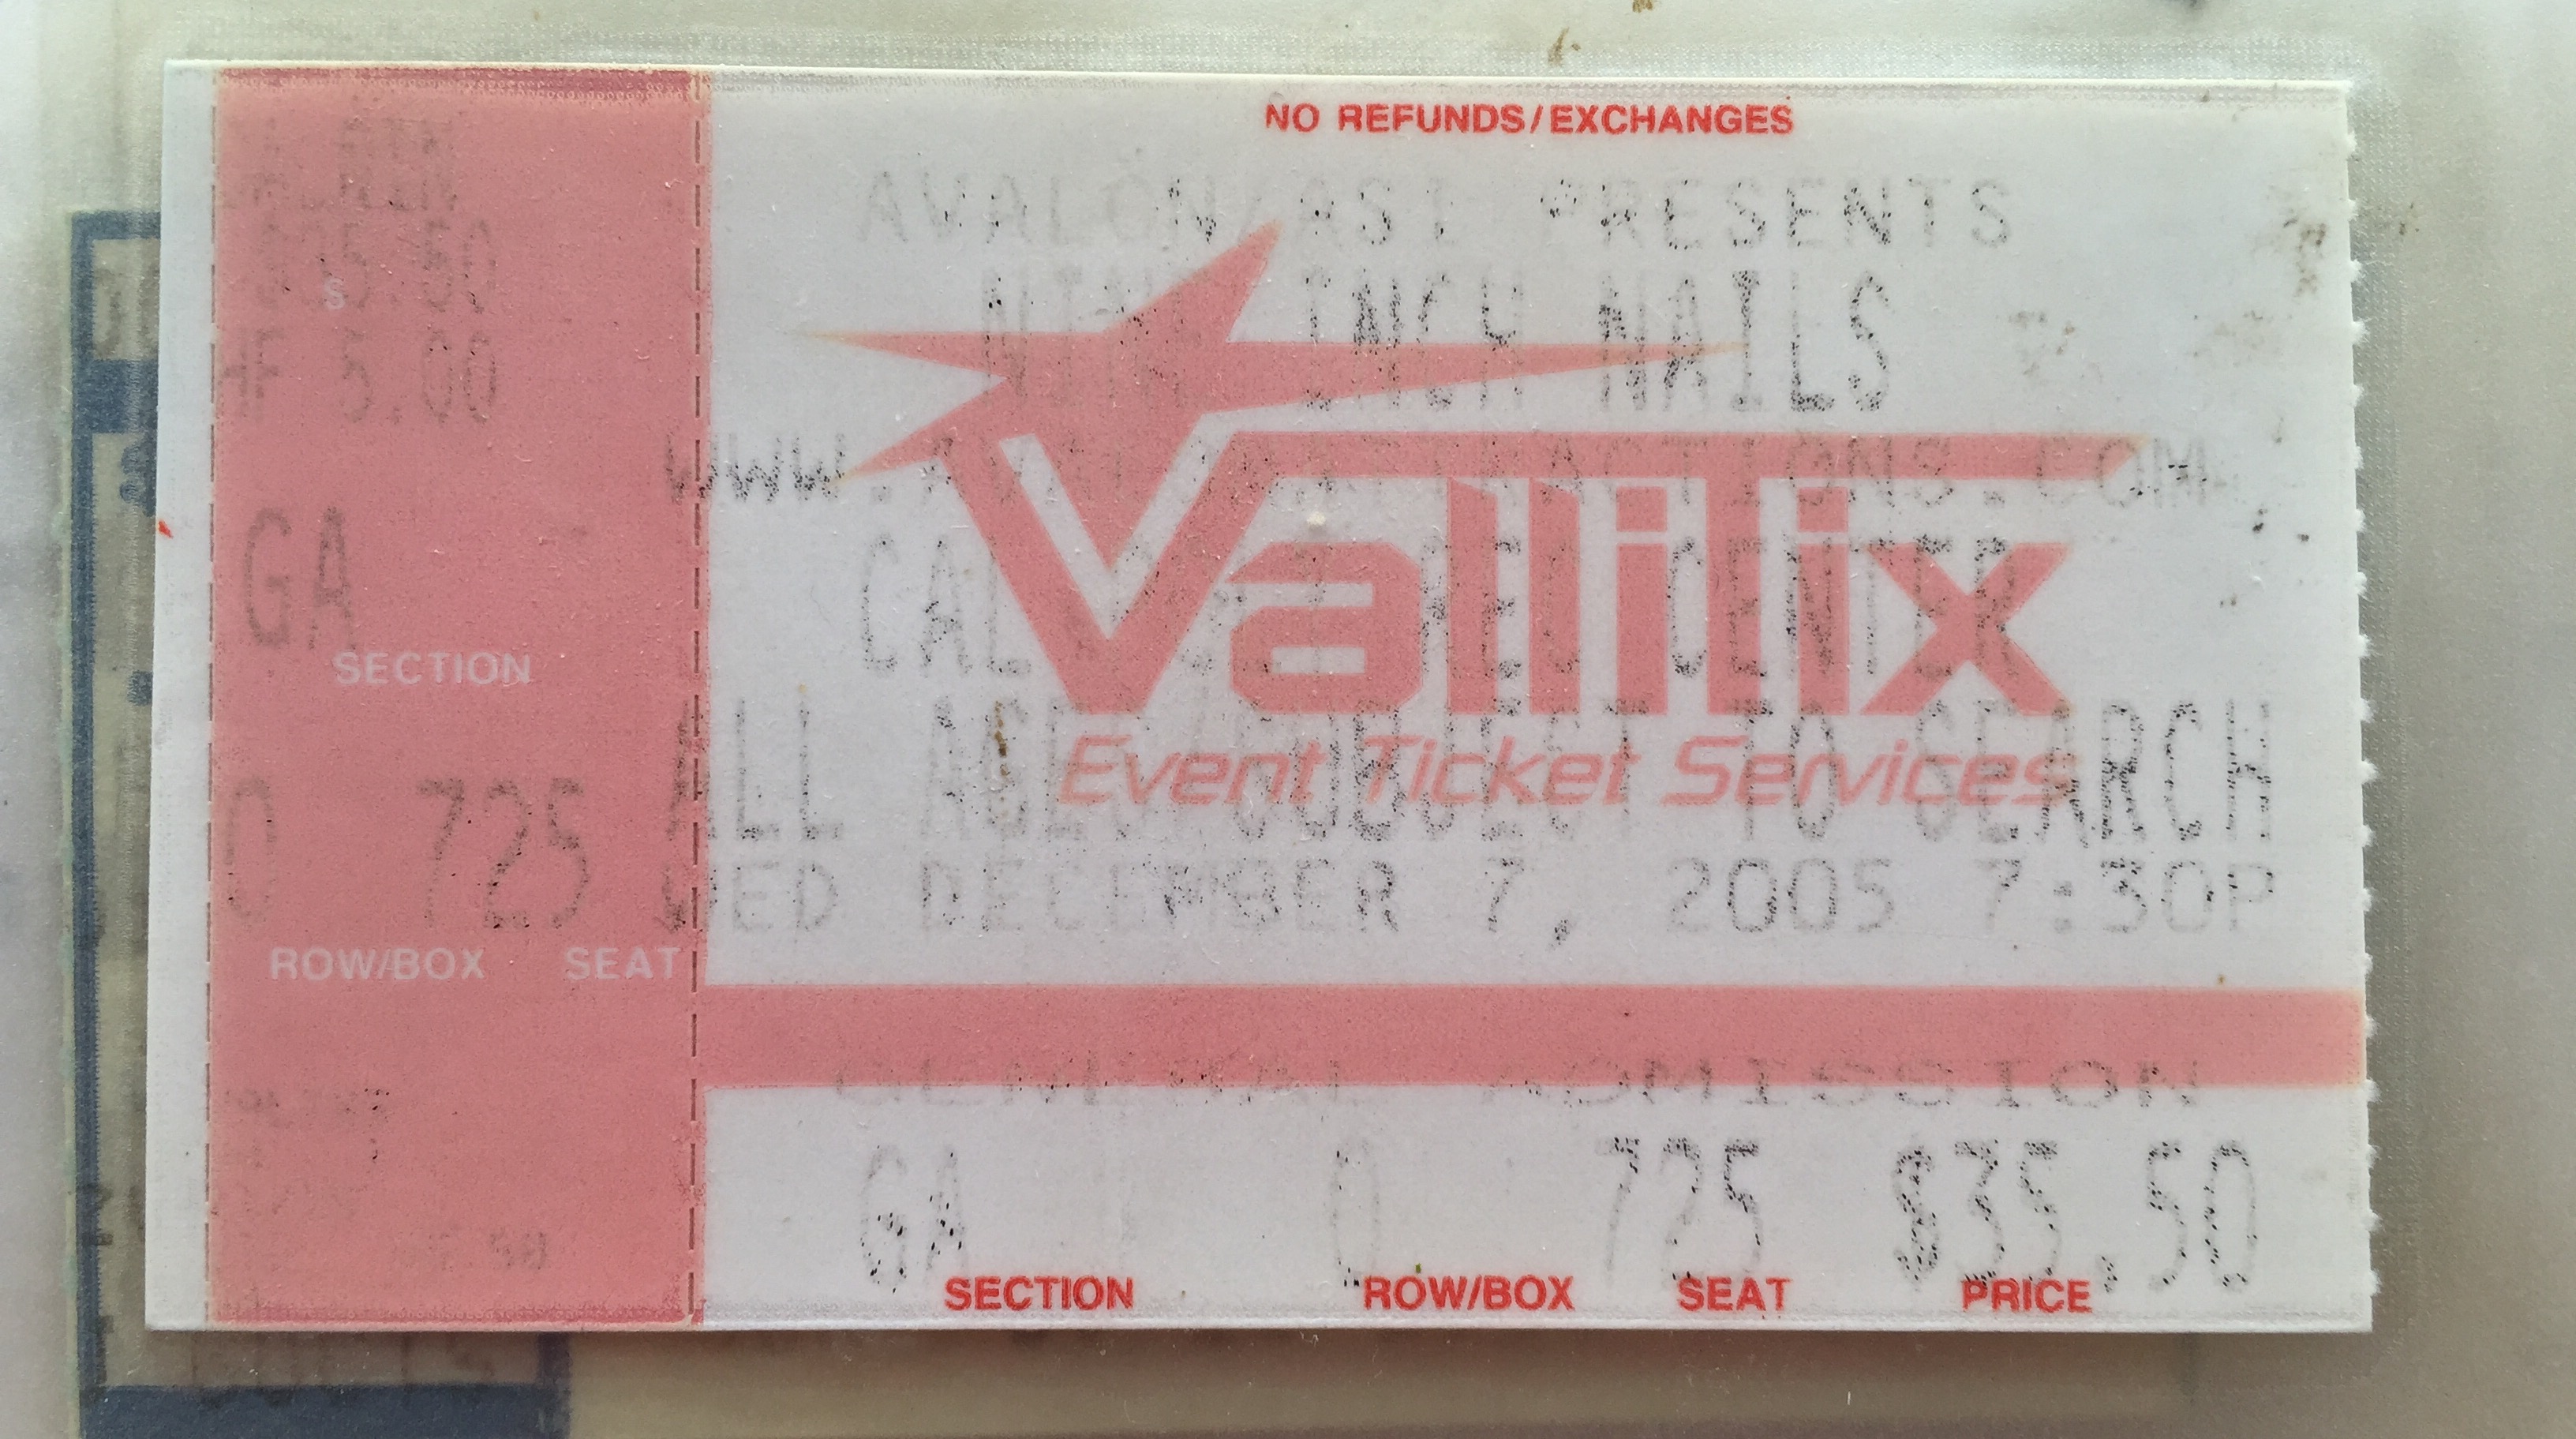 2005/12/07 Ticket